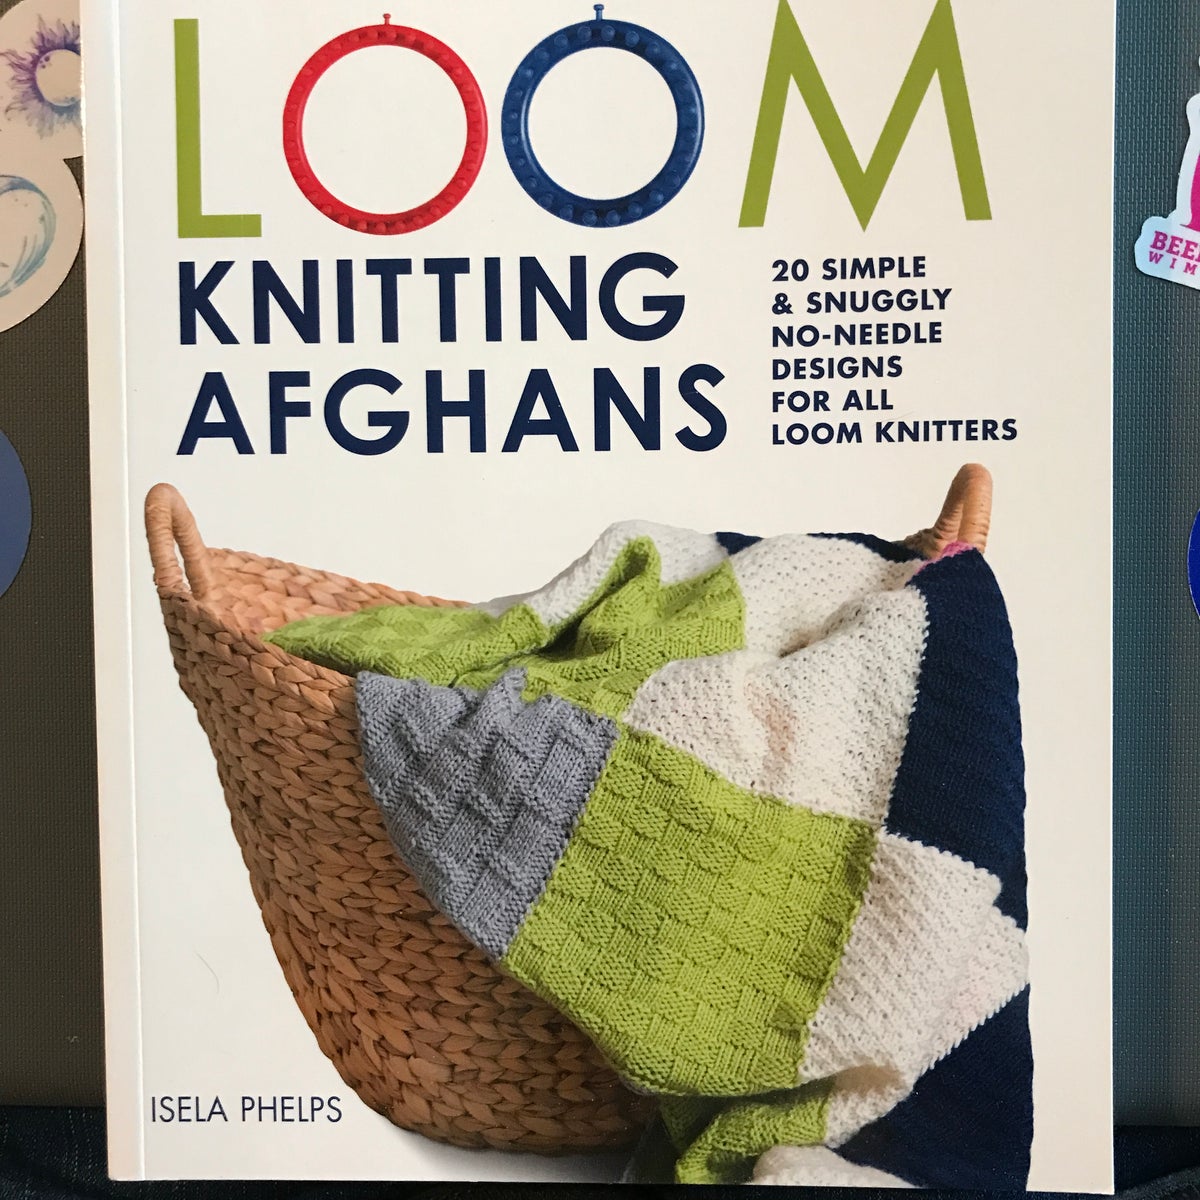 KB Looms - BOOK - Afghan Loom Projects